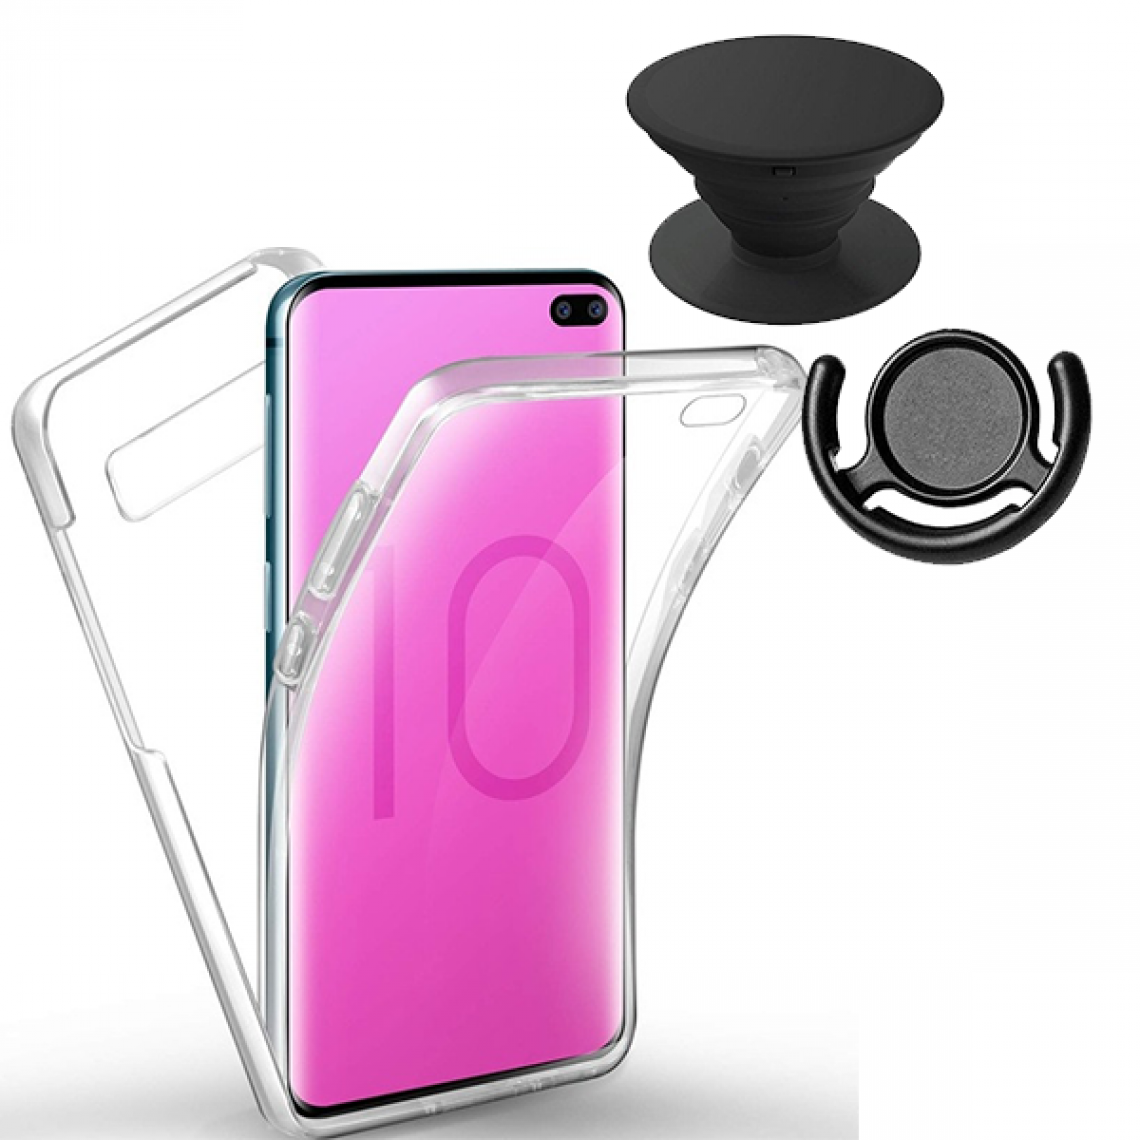 Phonecare - Kit Coque 3x1 360° Impact Protection + 1 PopSocket + 1 Support PopSocket Noir - Impact Protection - Samsung A40 - Coque, étui smartphone